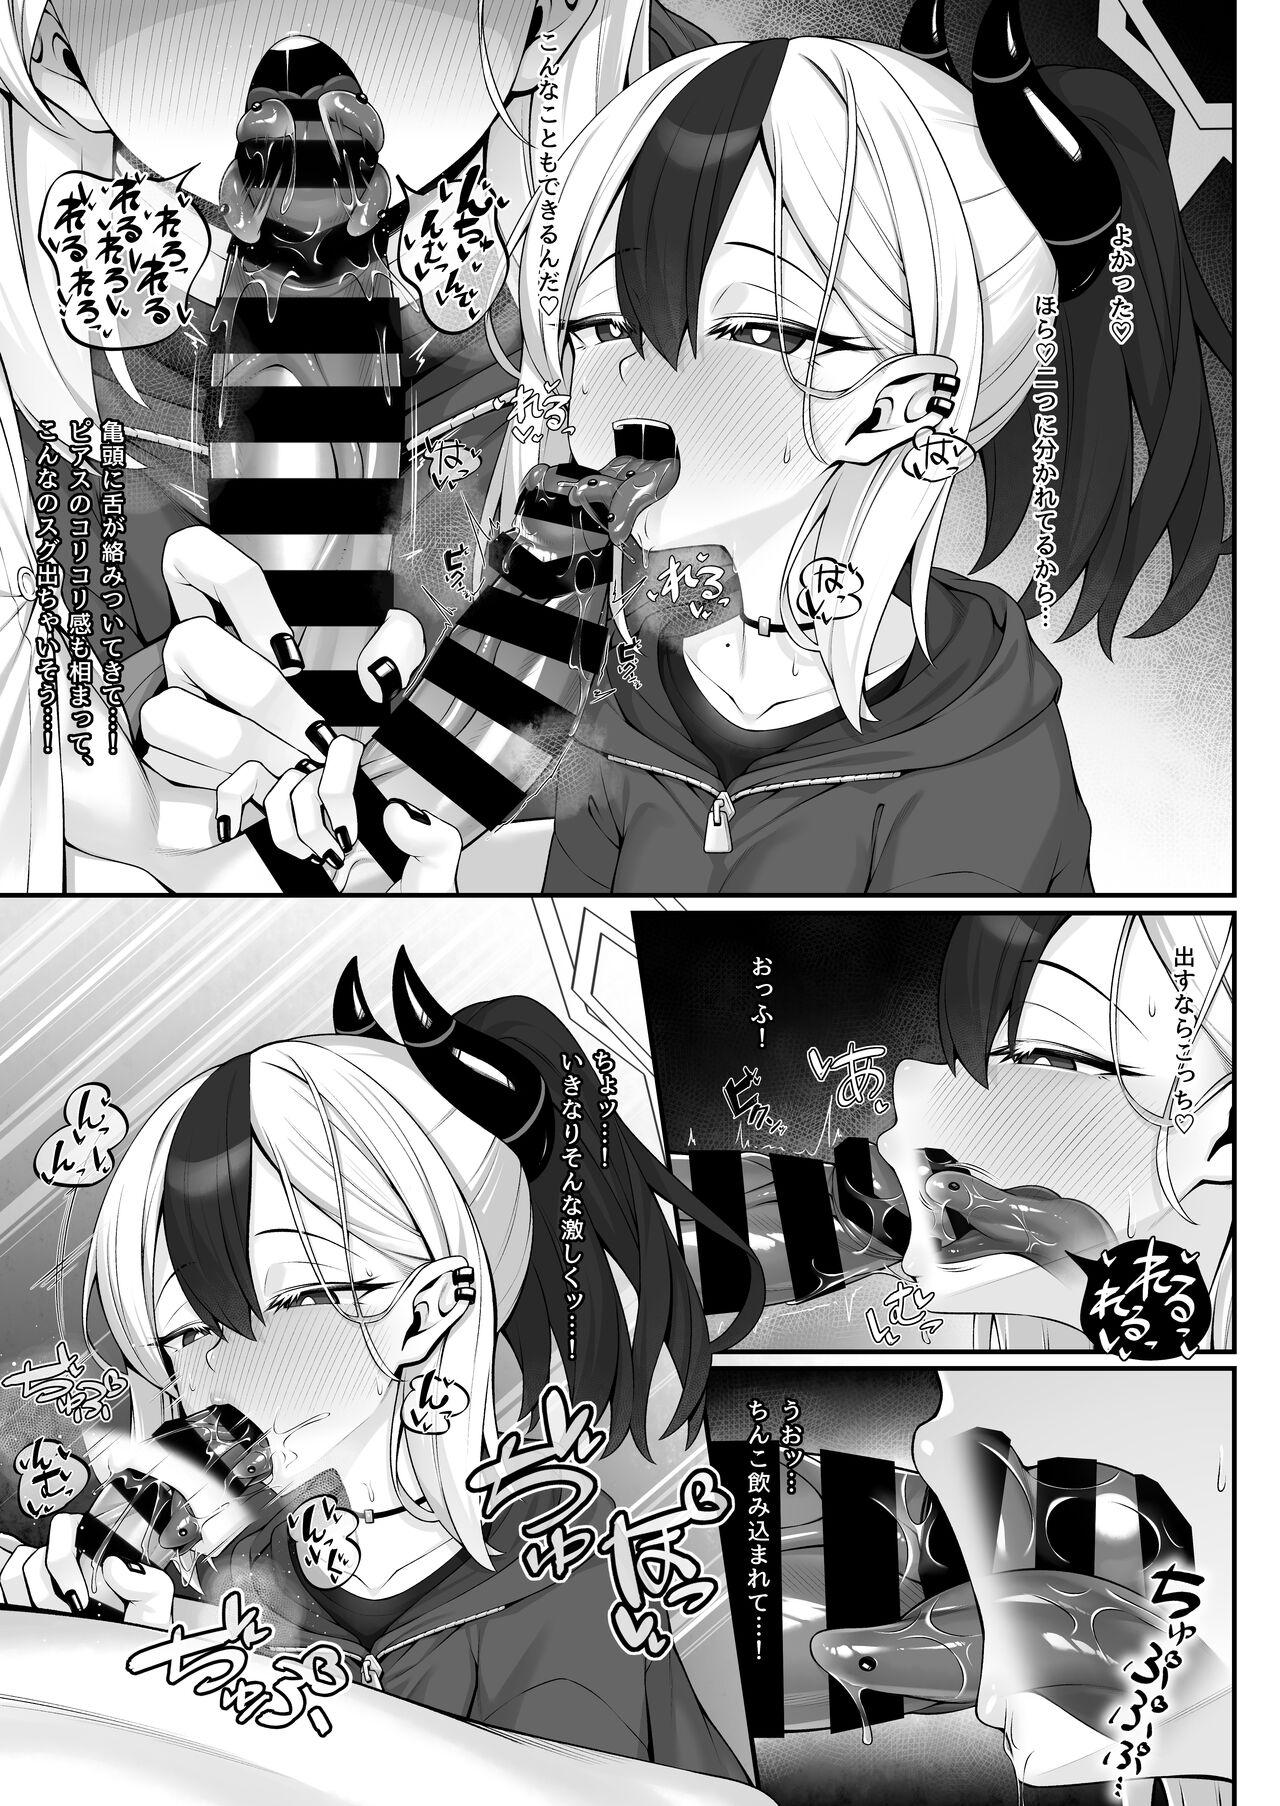 Pov Sex Sputum Shita-pi Kayoko ni Fella de Nuite Morau dake no Tanpen Manga - Blue archive Butts - Page 4